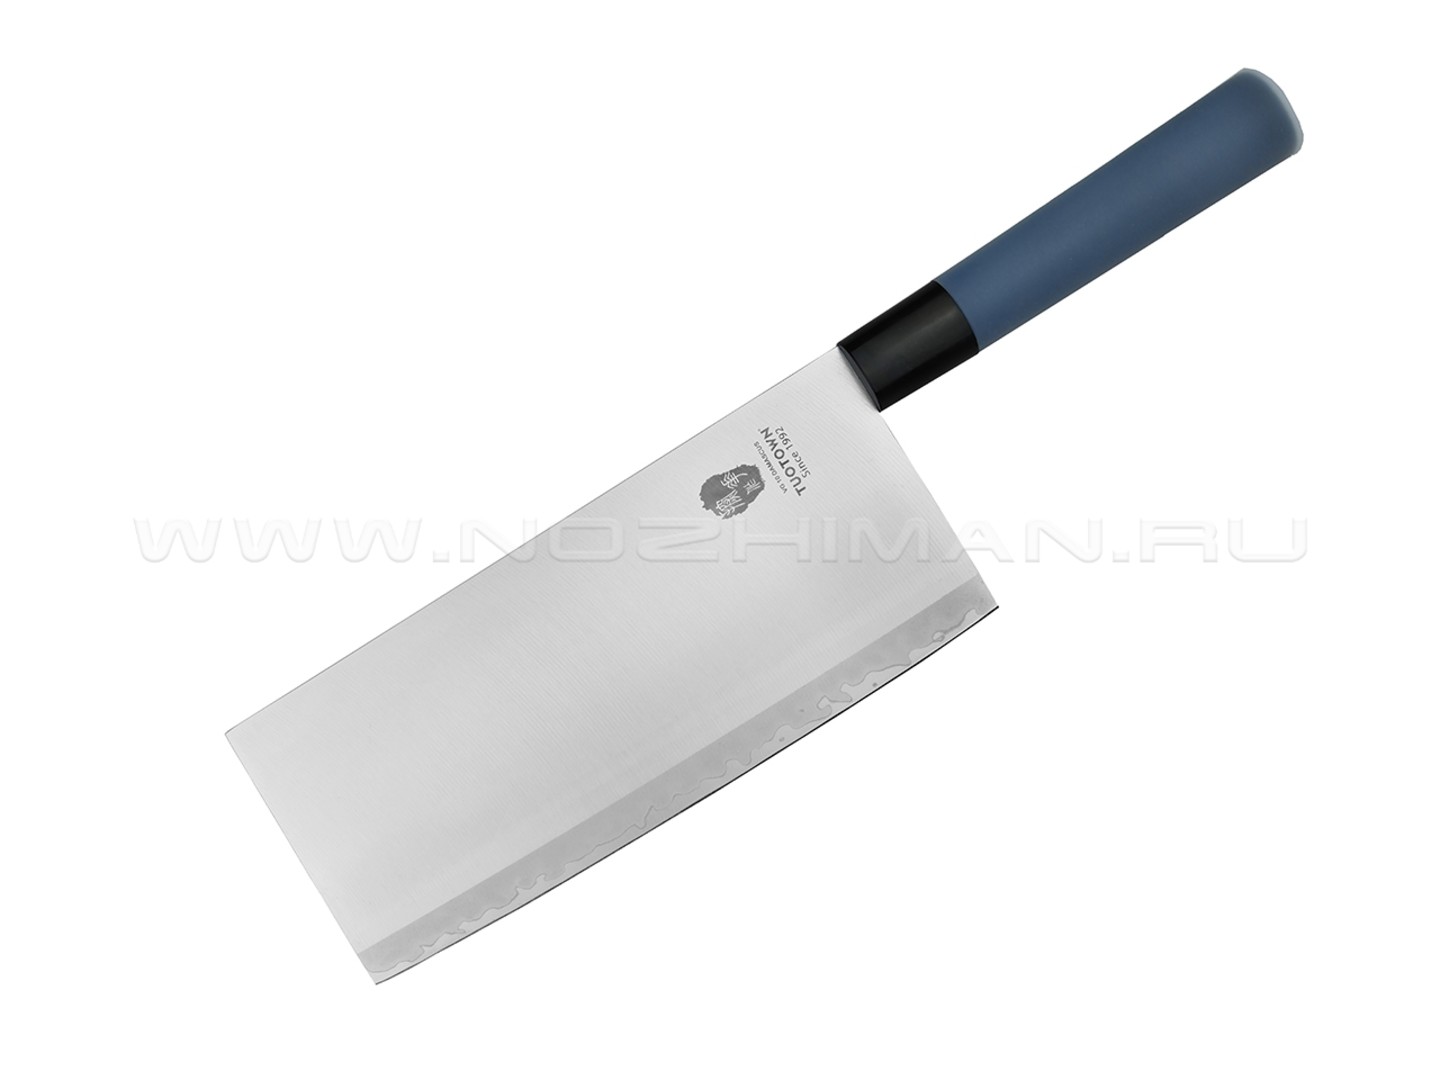 TuoTown кованый нож Sang Dao 808013 сталь VG-10 Damascus, рукоять ABS, силикон